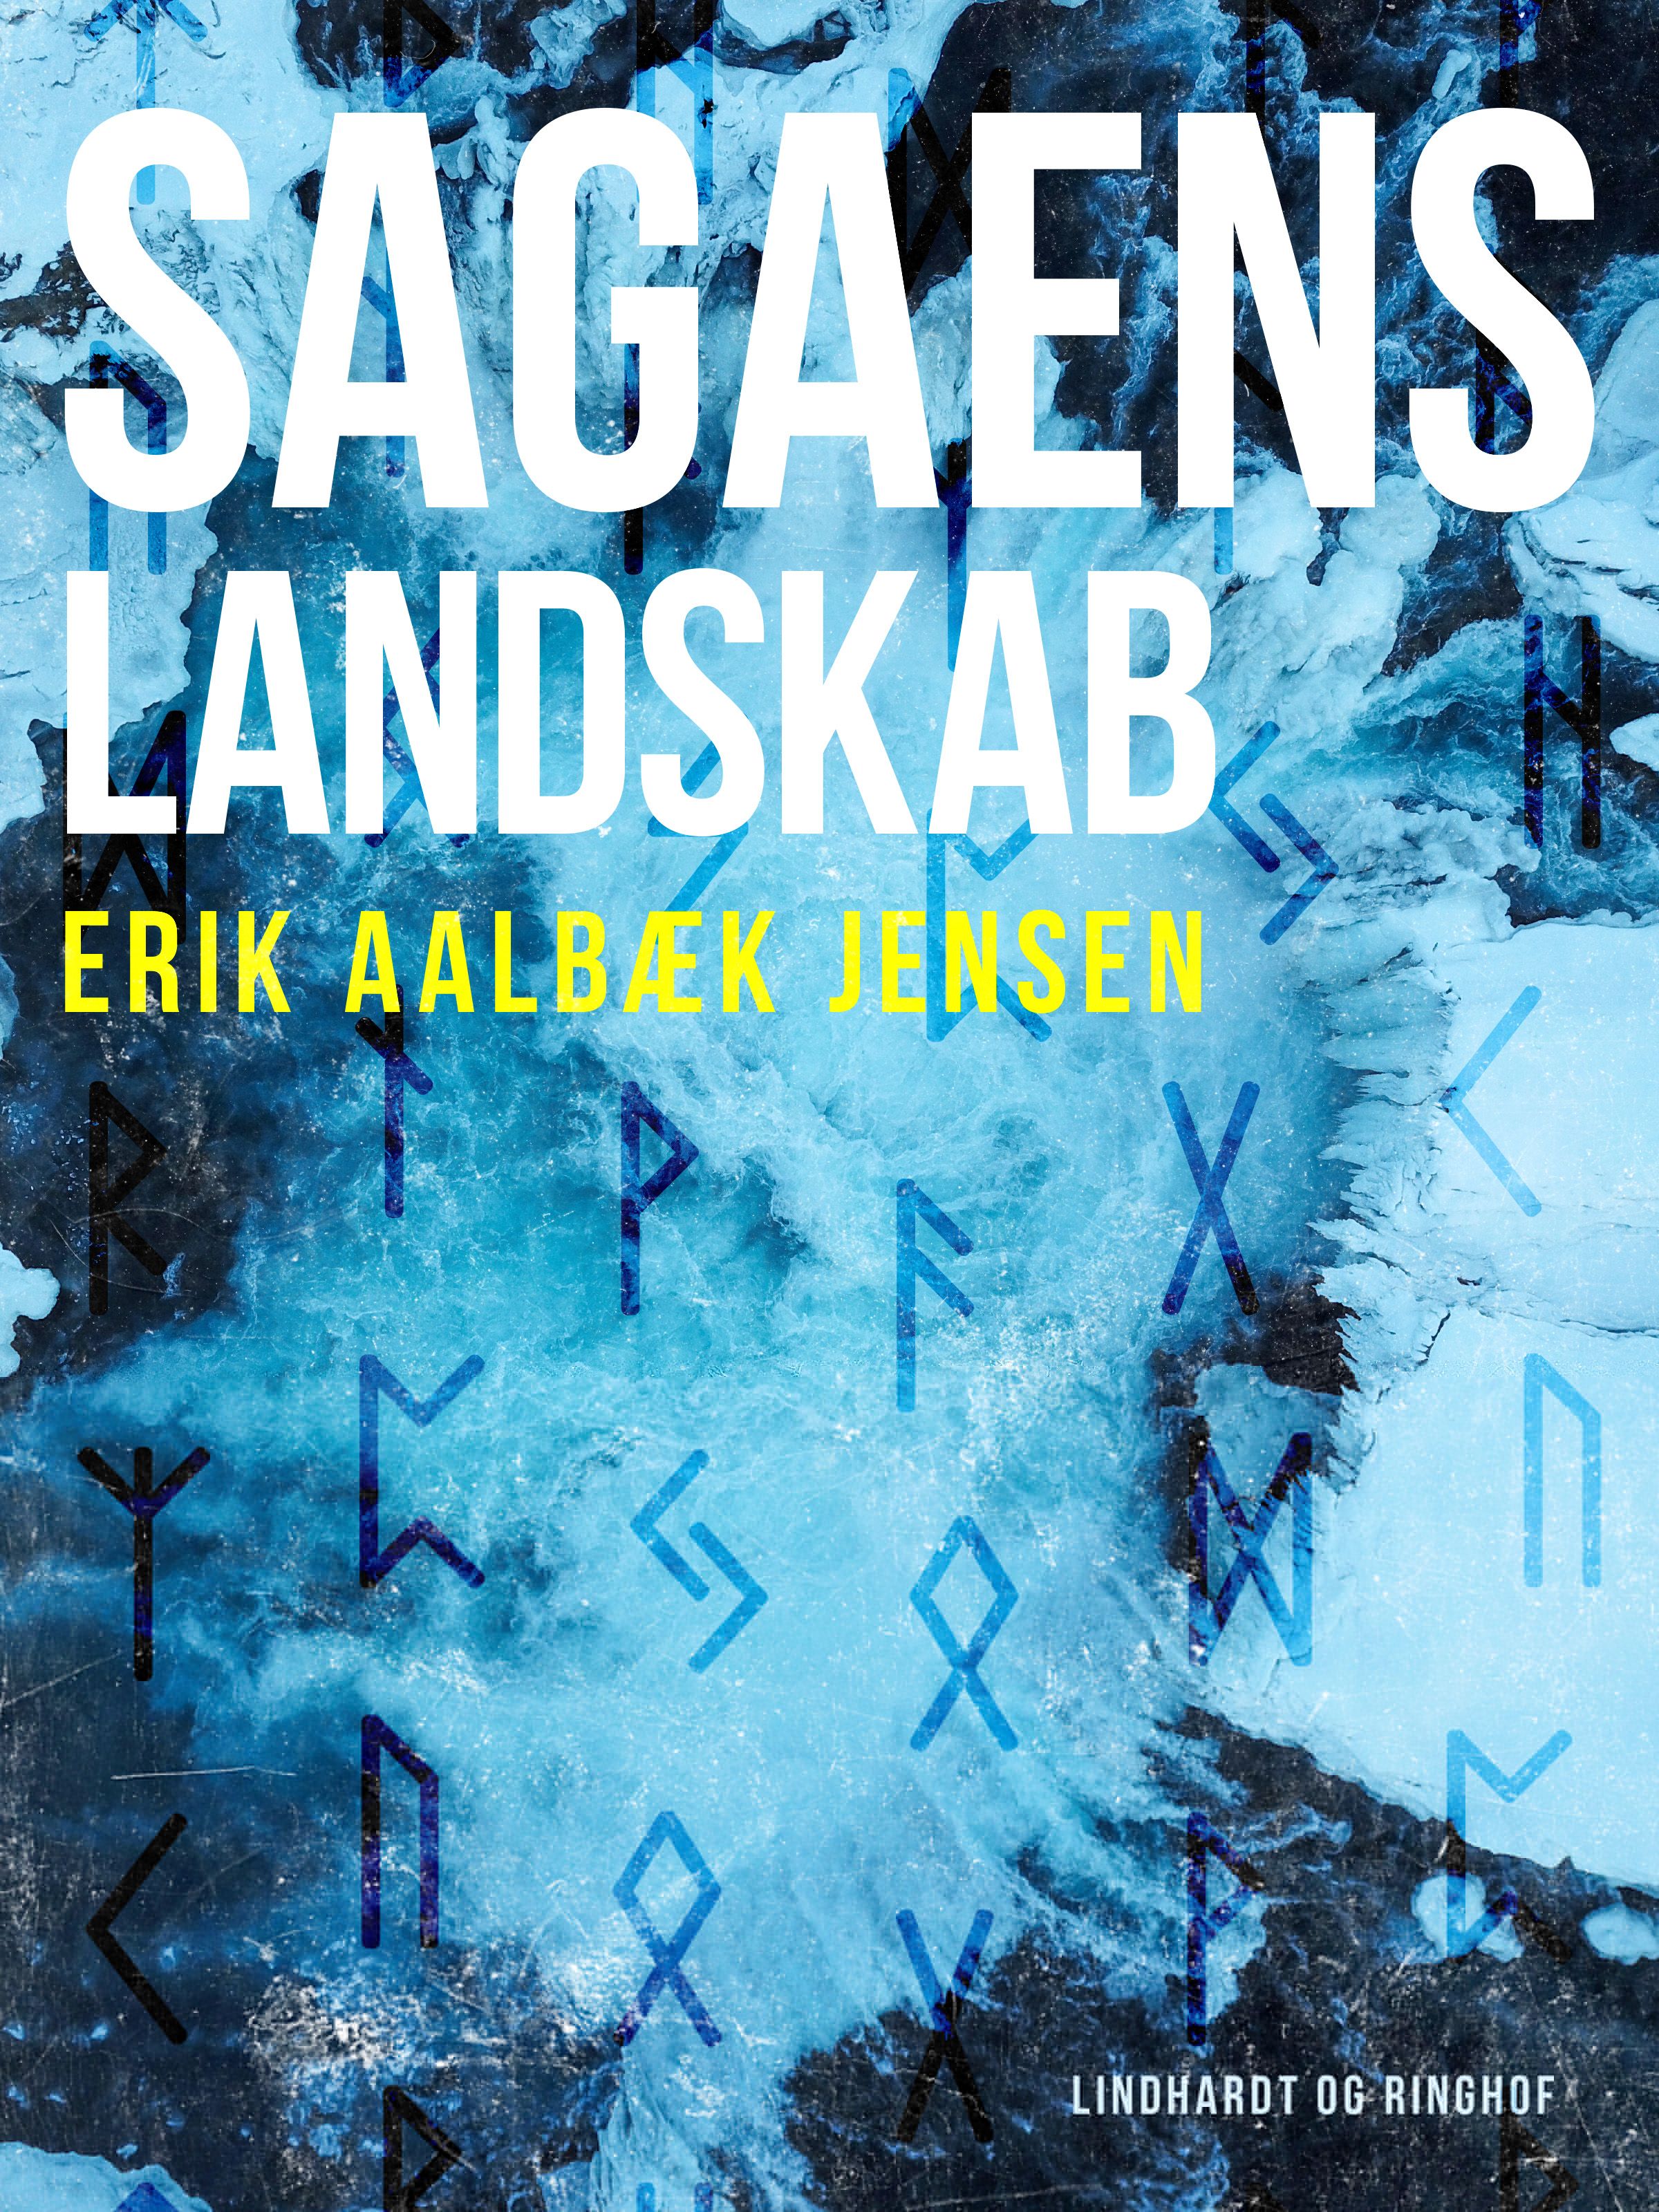 Sagaens landskab, e-bok av Erik Aalbæk Jensen